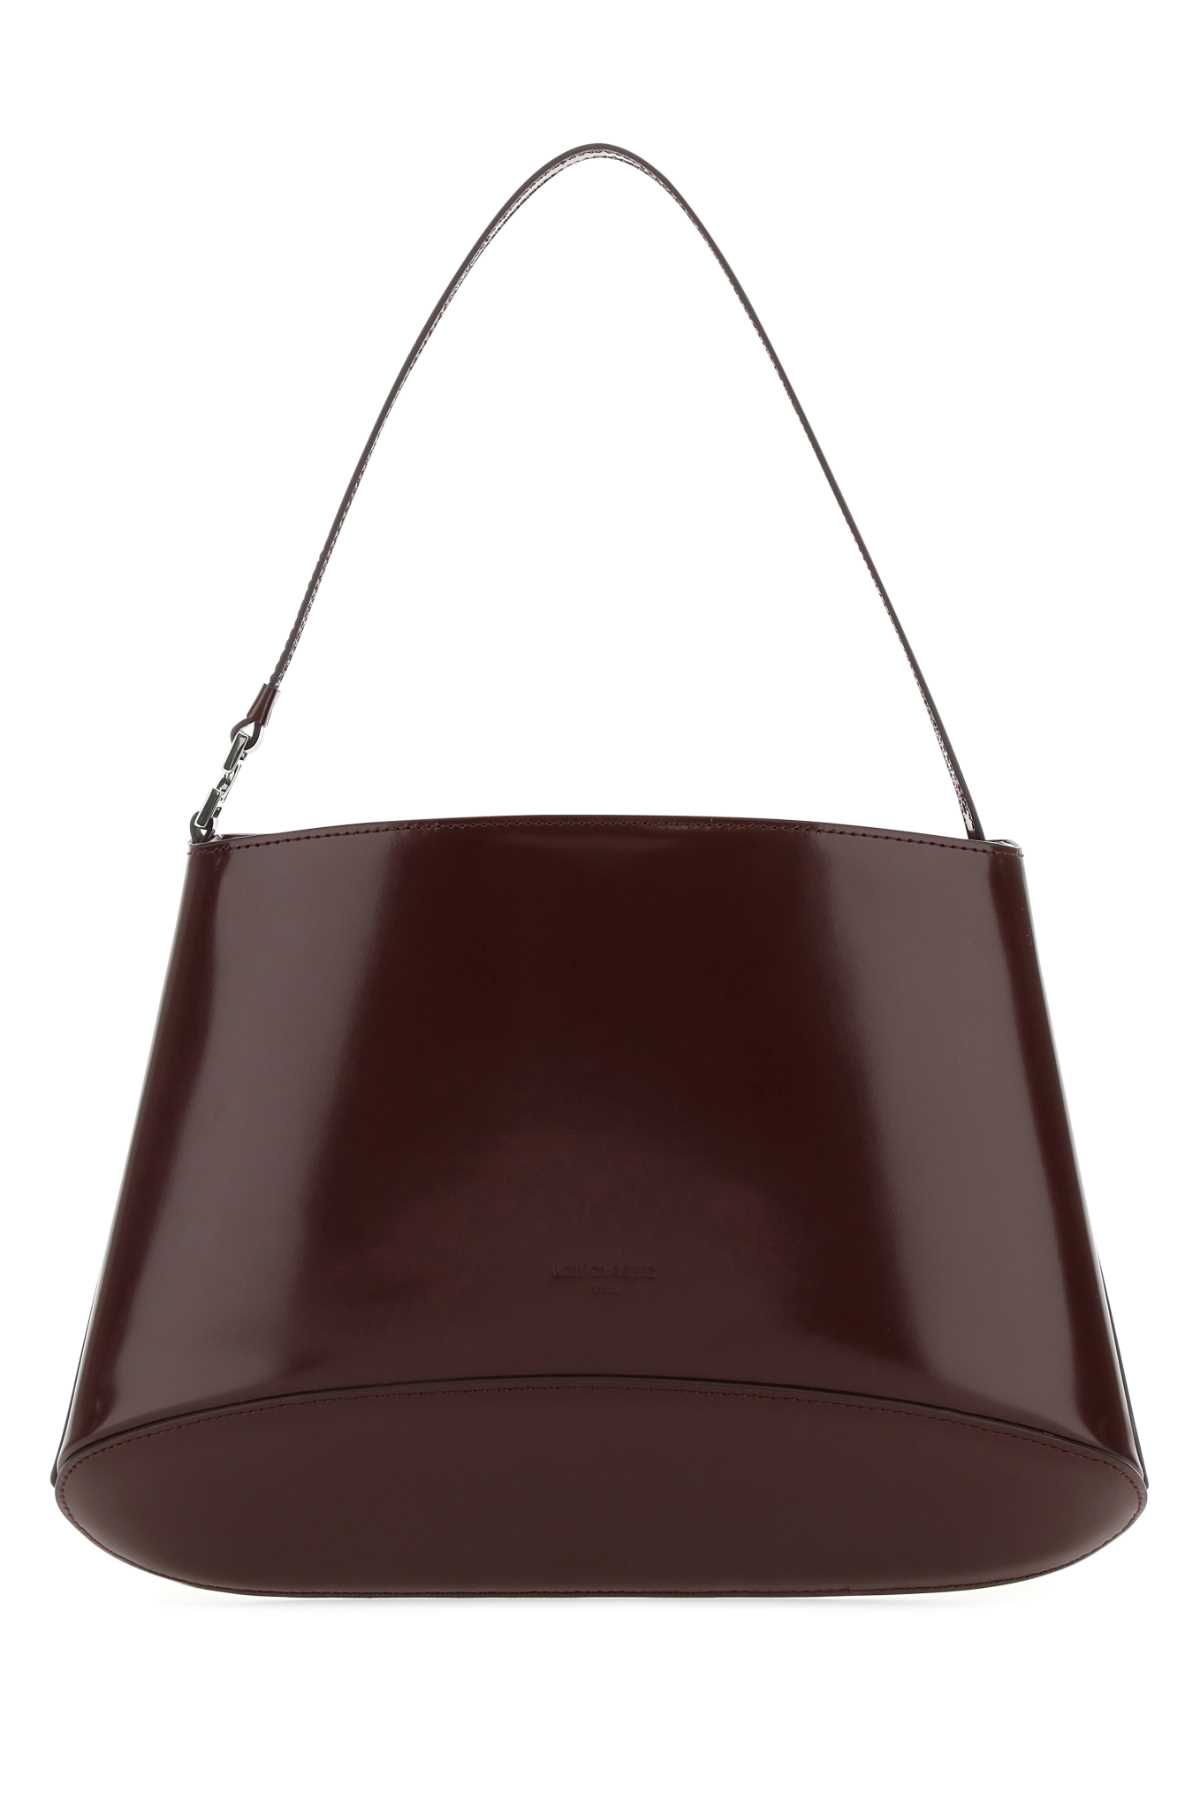 Grape Leather Handbag